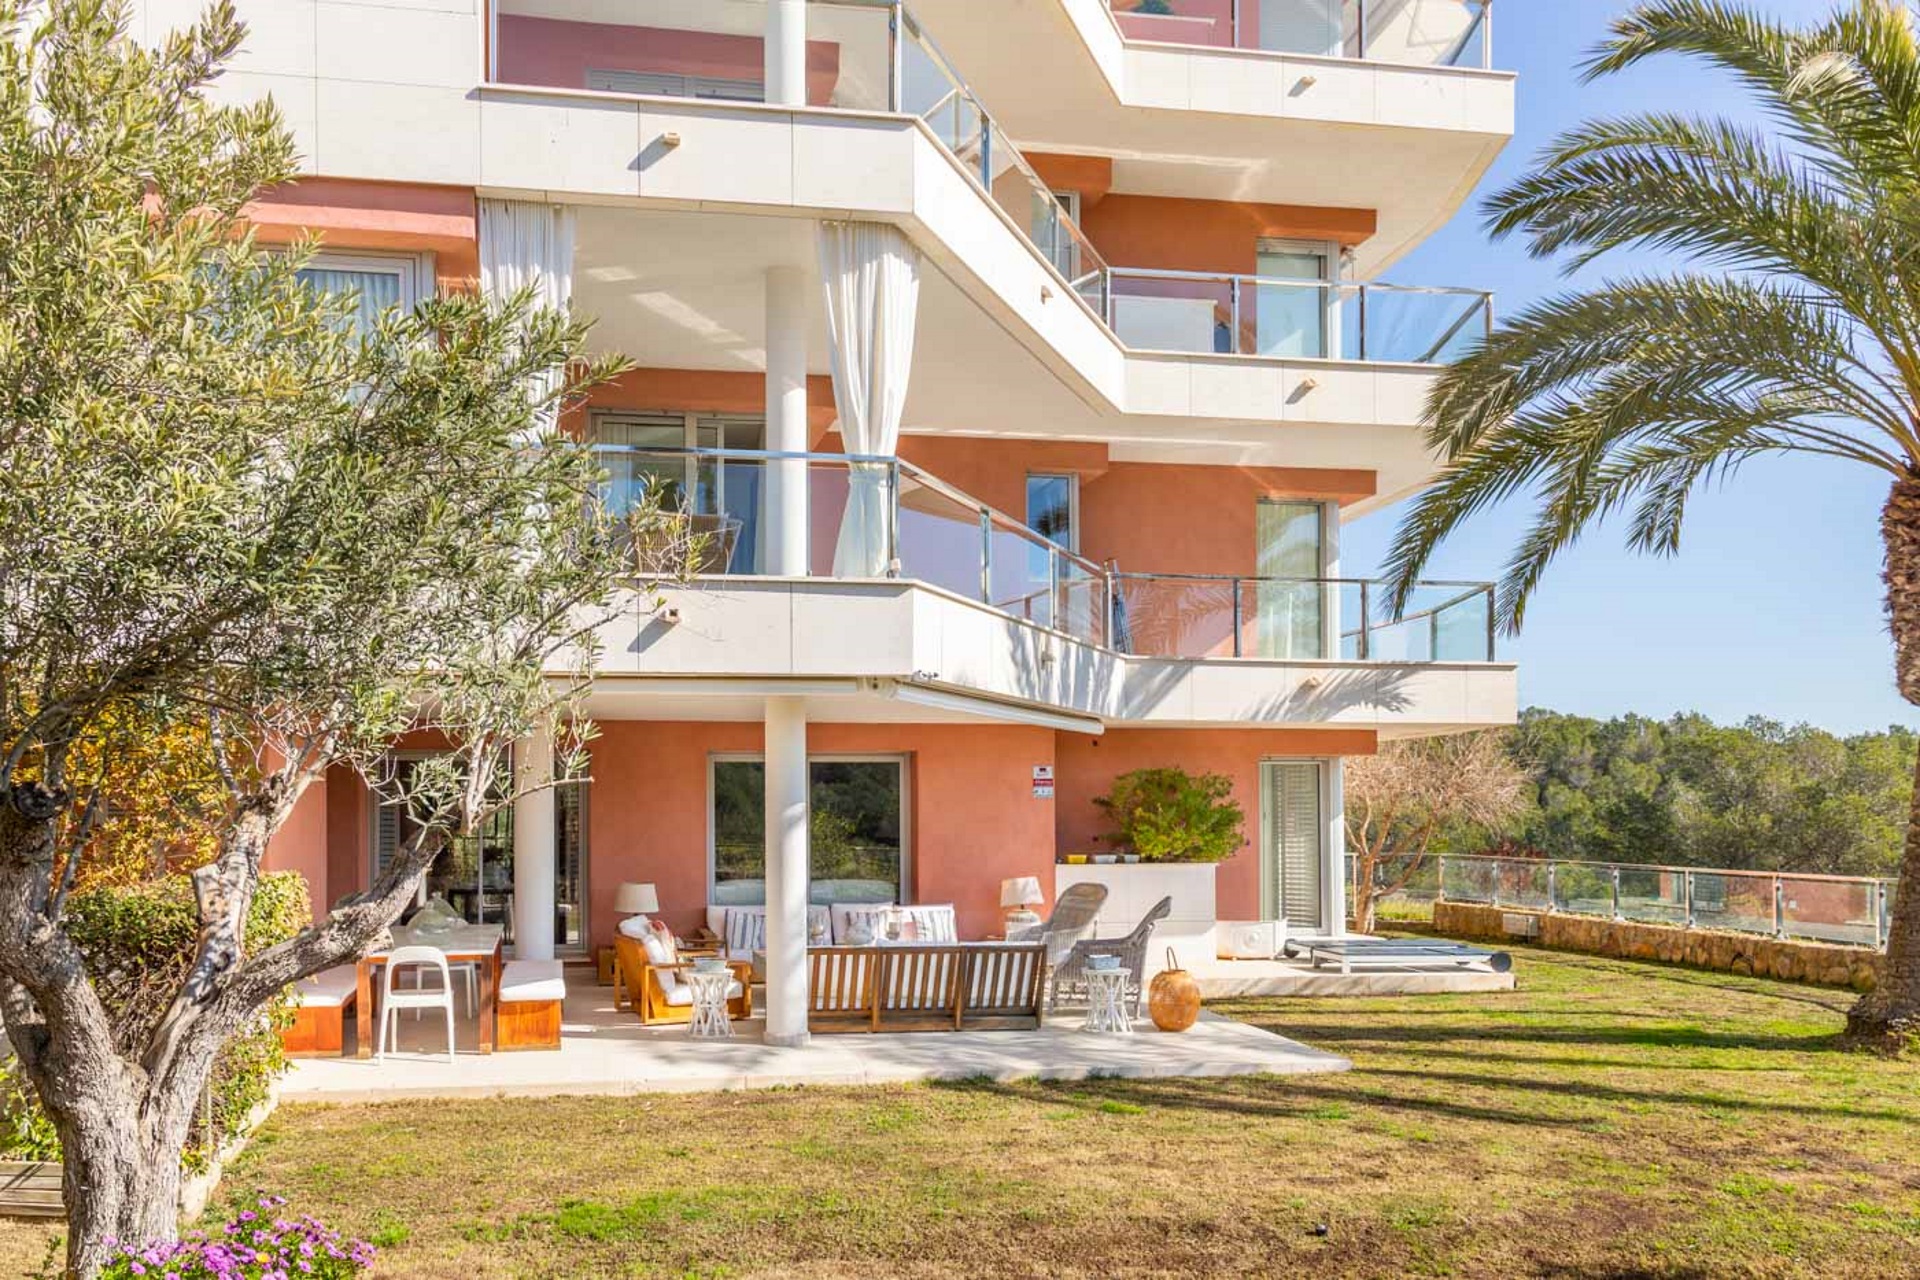 Mallorca for sale: very generous garden apartment in Sol de Mallorca with 5 bedrooms